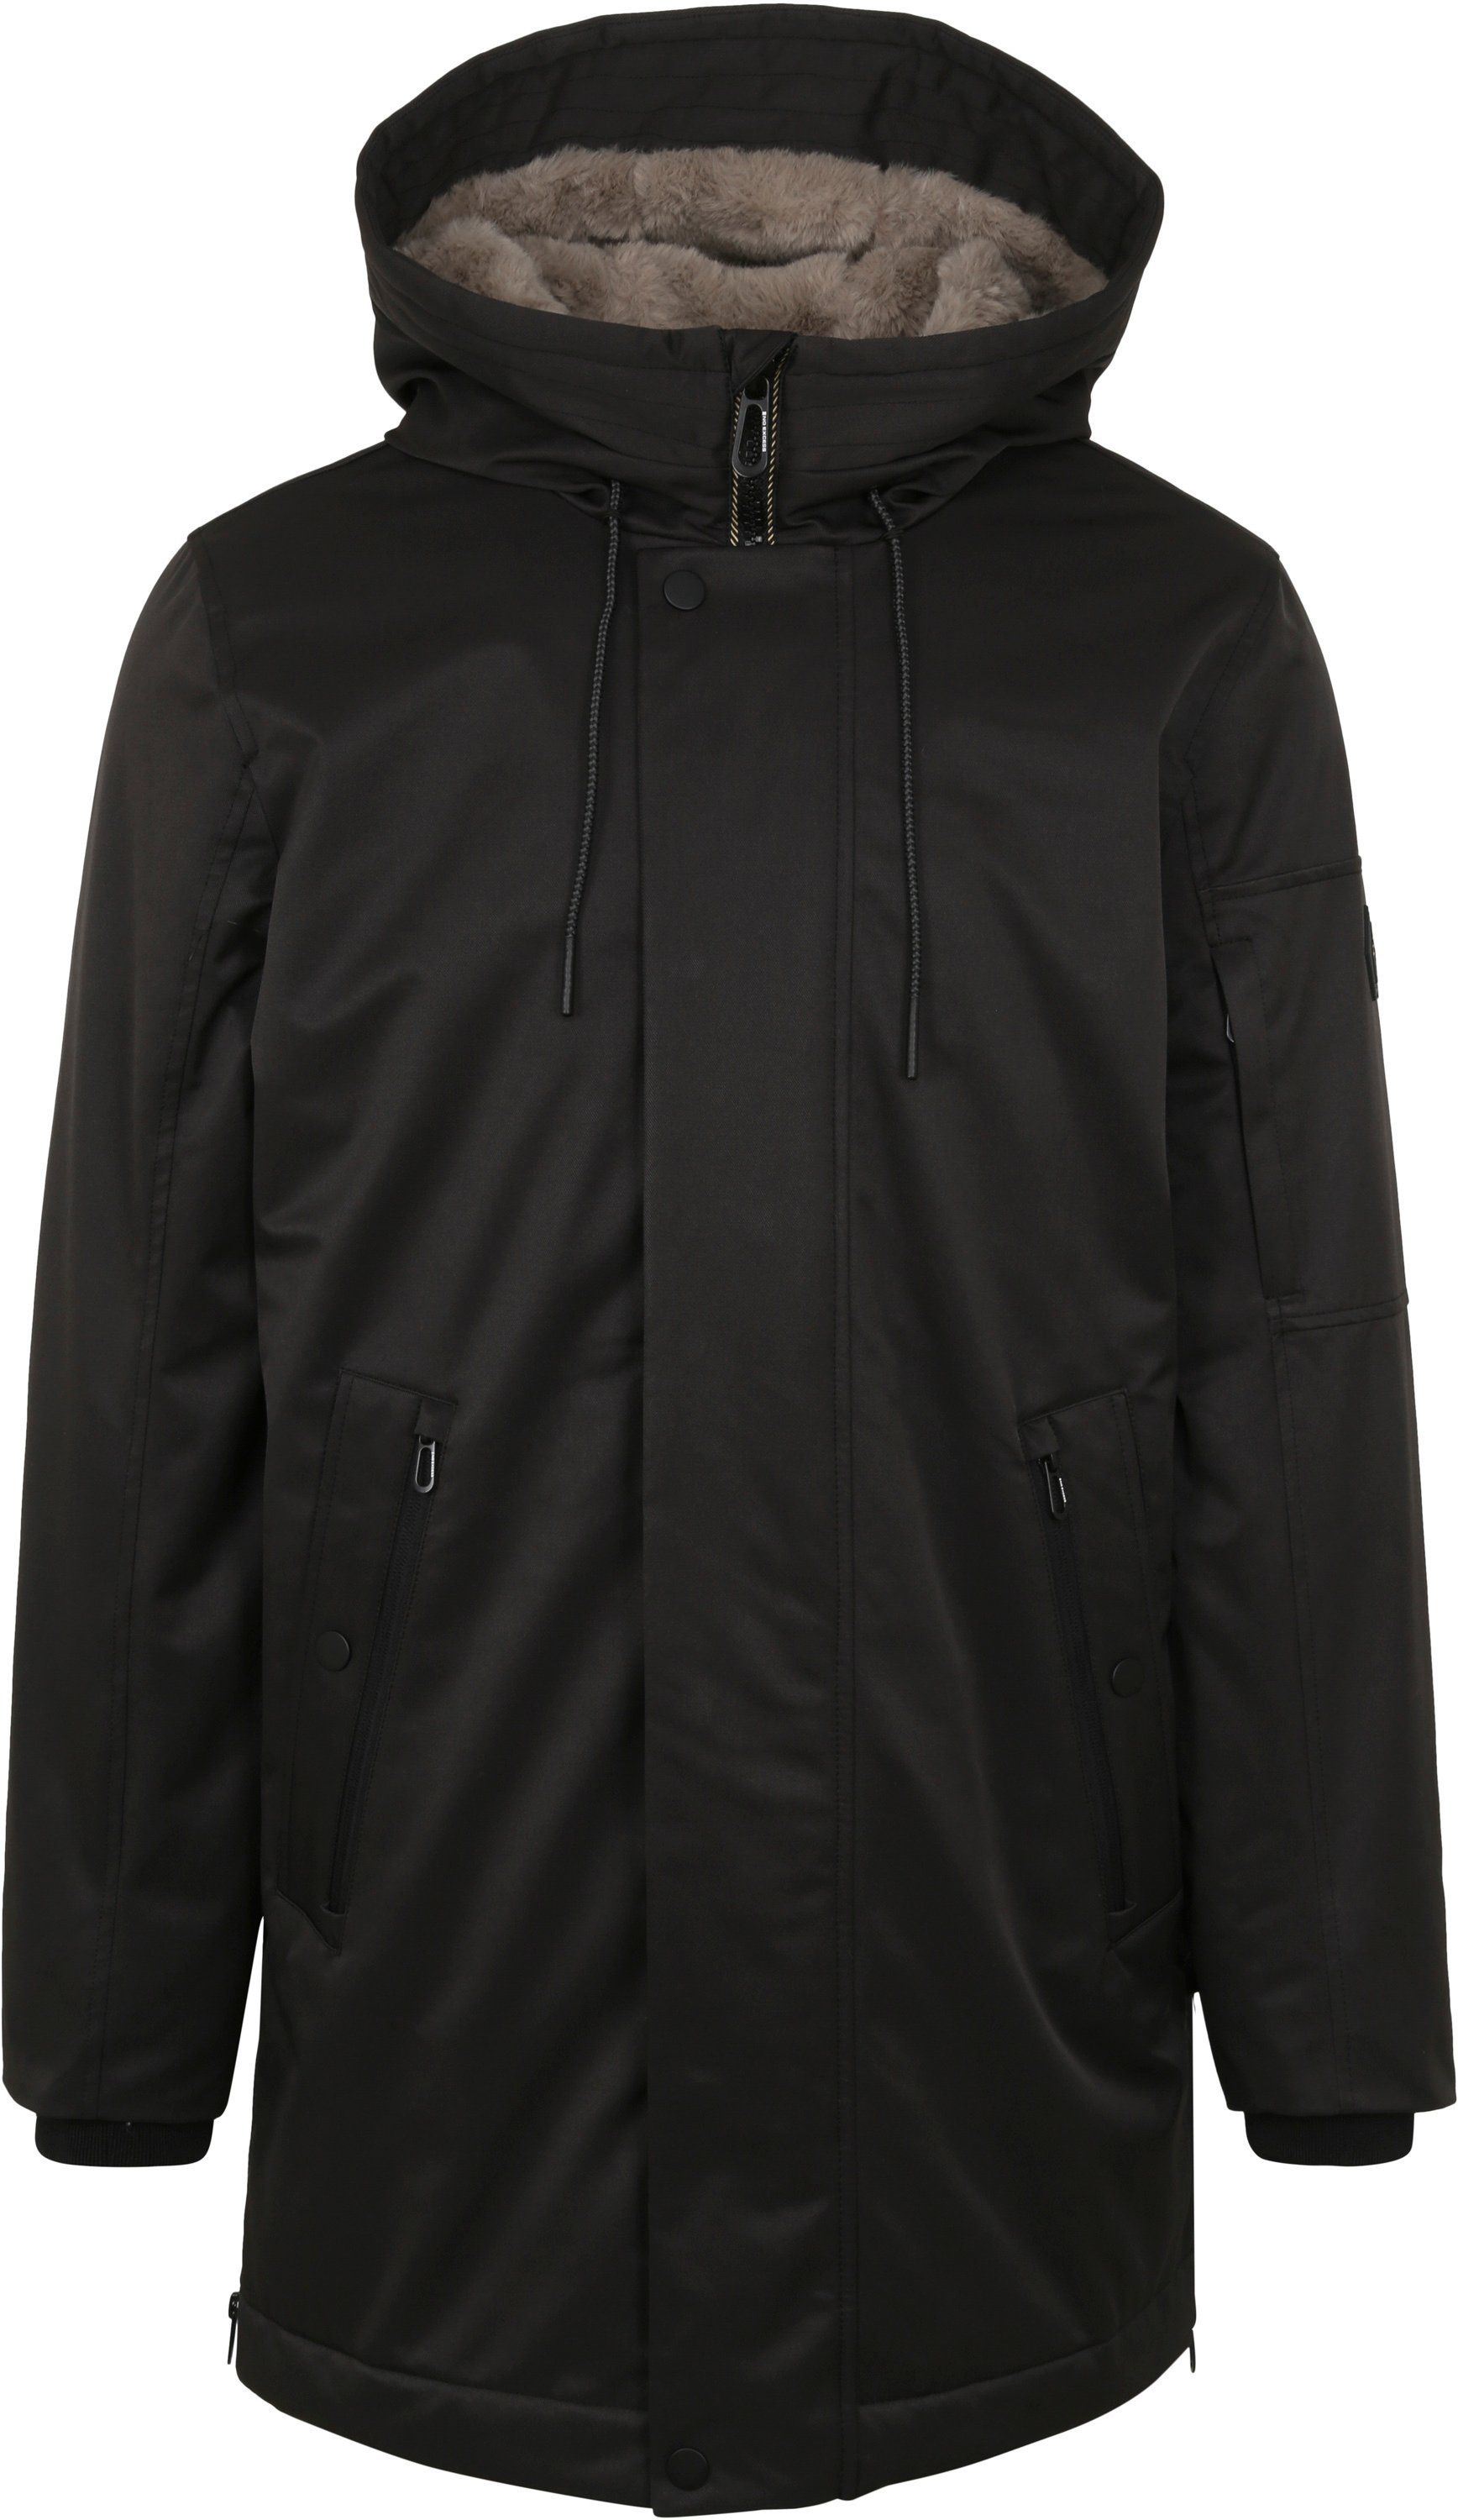 No-Excess Jacket Black size 3XL